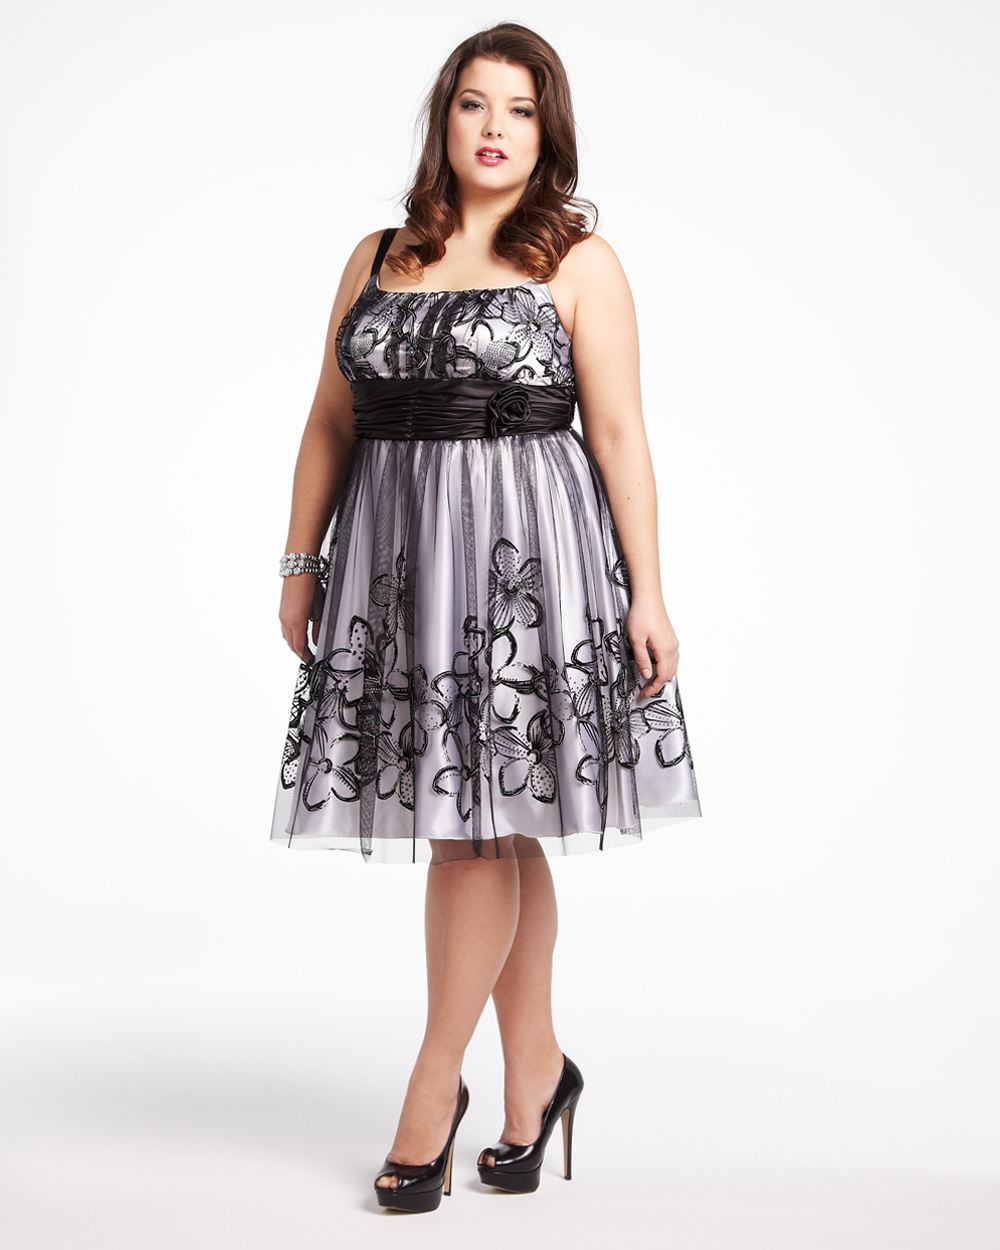 Dresses for plus size women flattering dresses for plus size women AKWRTEY